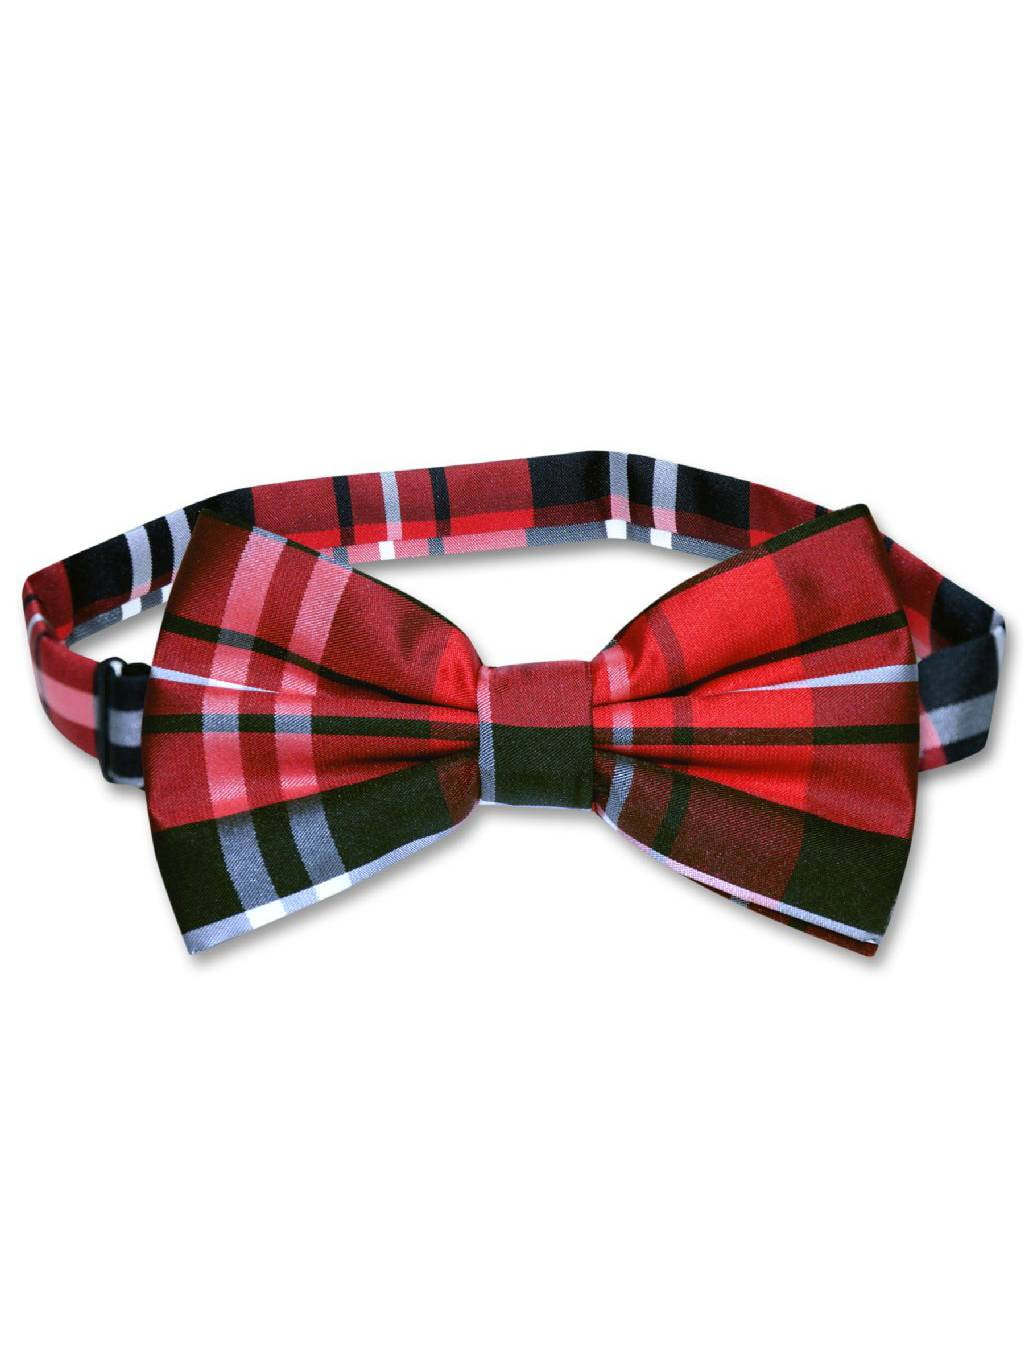 15 Cummerbund and Hanky Set Tartan-Red/Green/Black Squares Polyester Bow Tie 